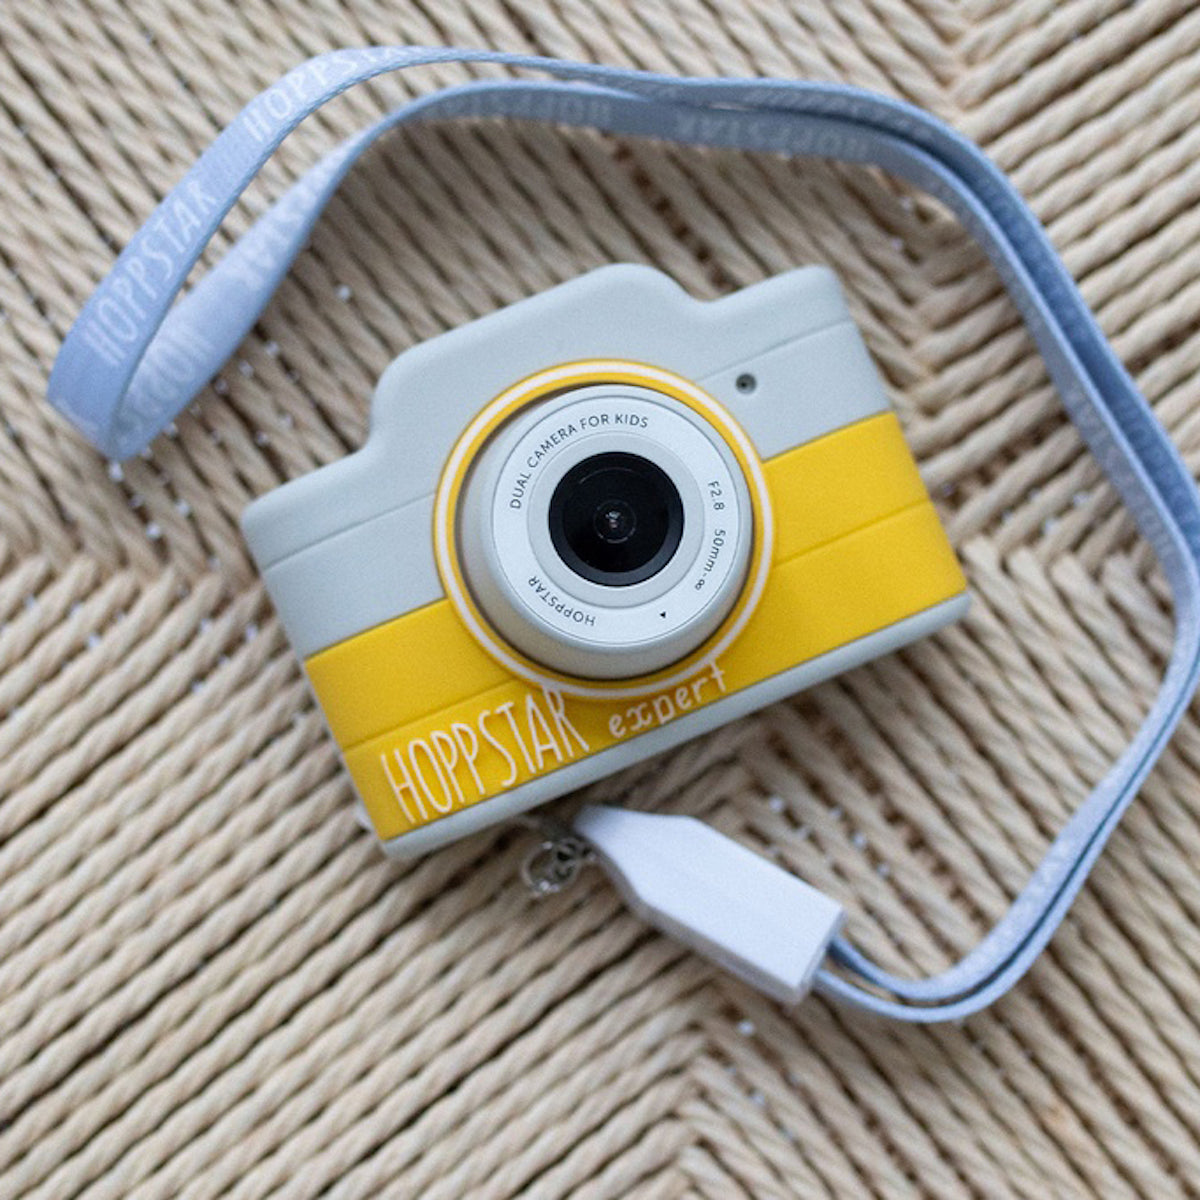 Hoppstar expert digitale camera citron